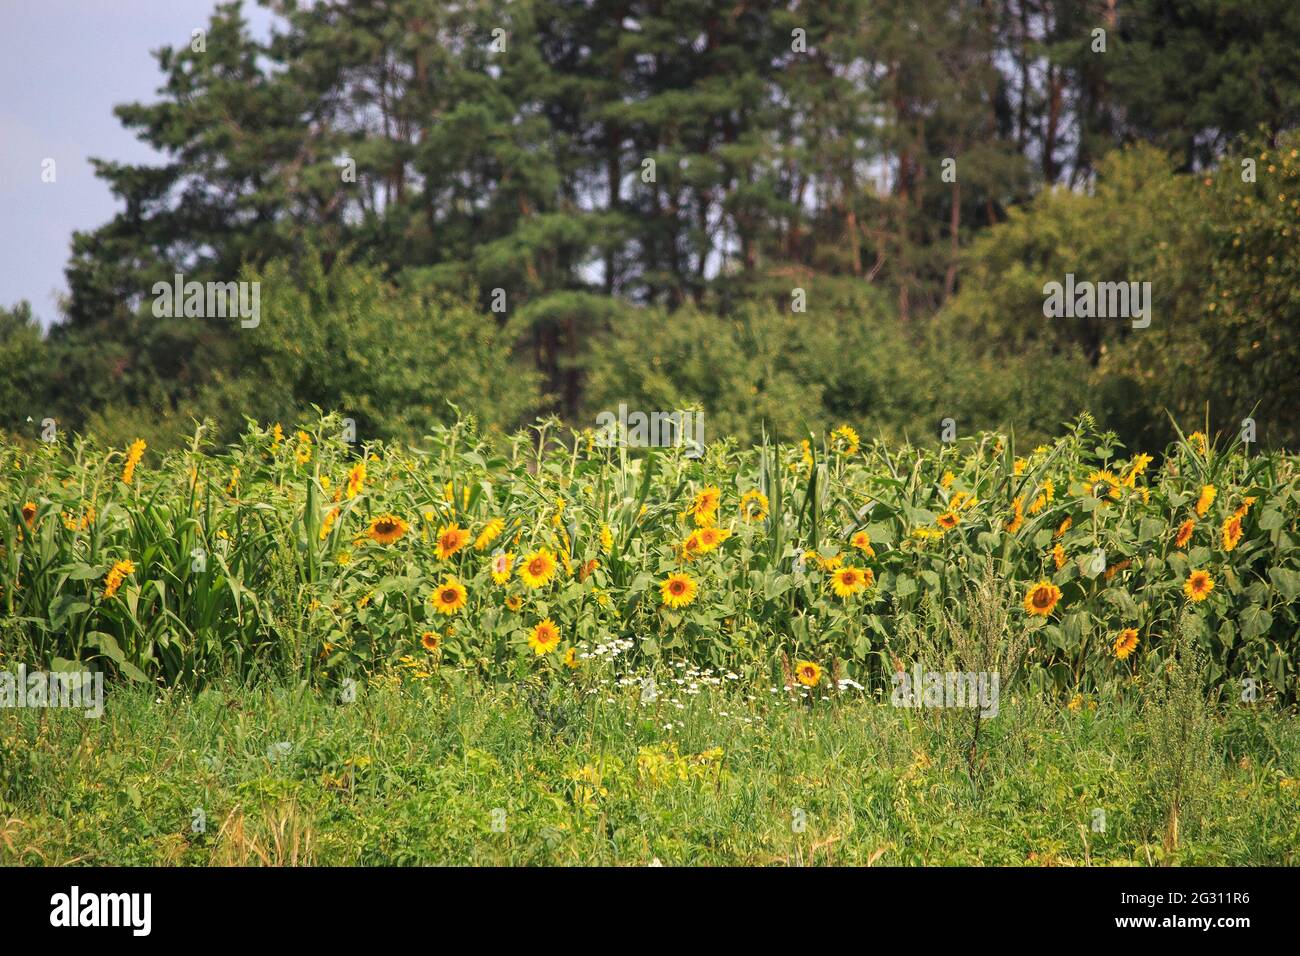 Field of sunflowers near the village Stock Photo